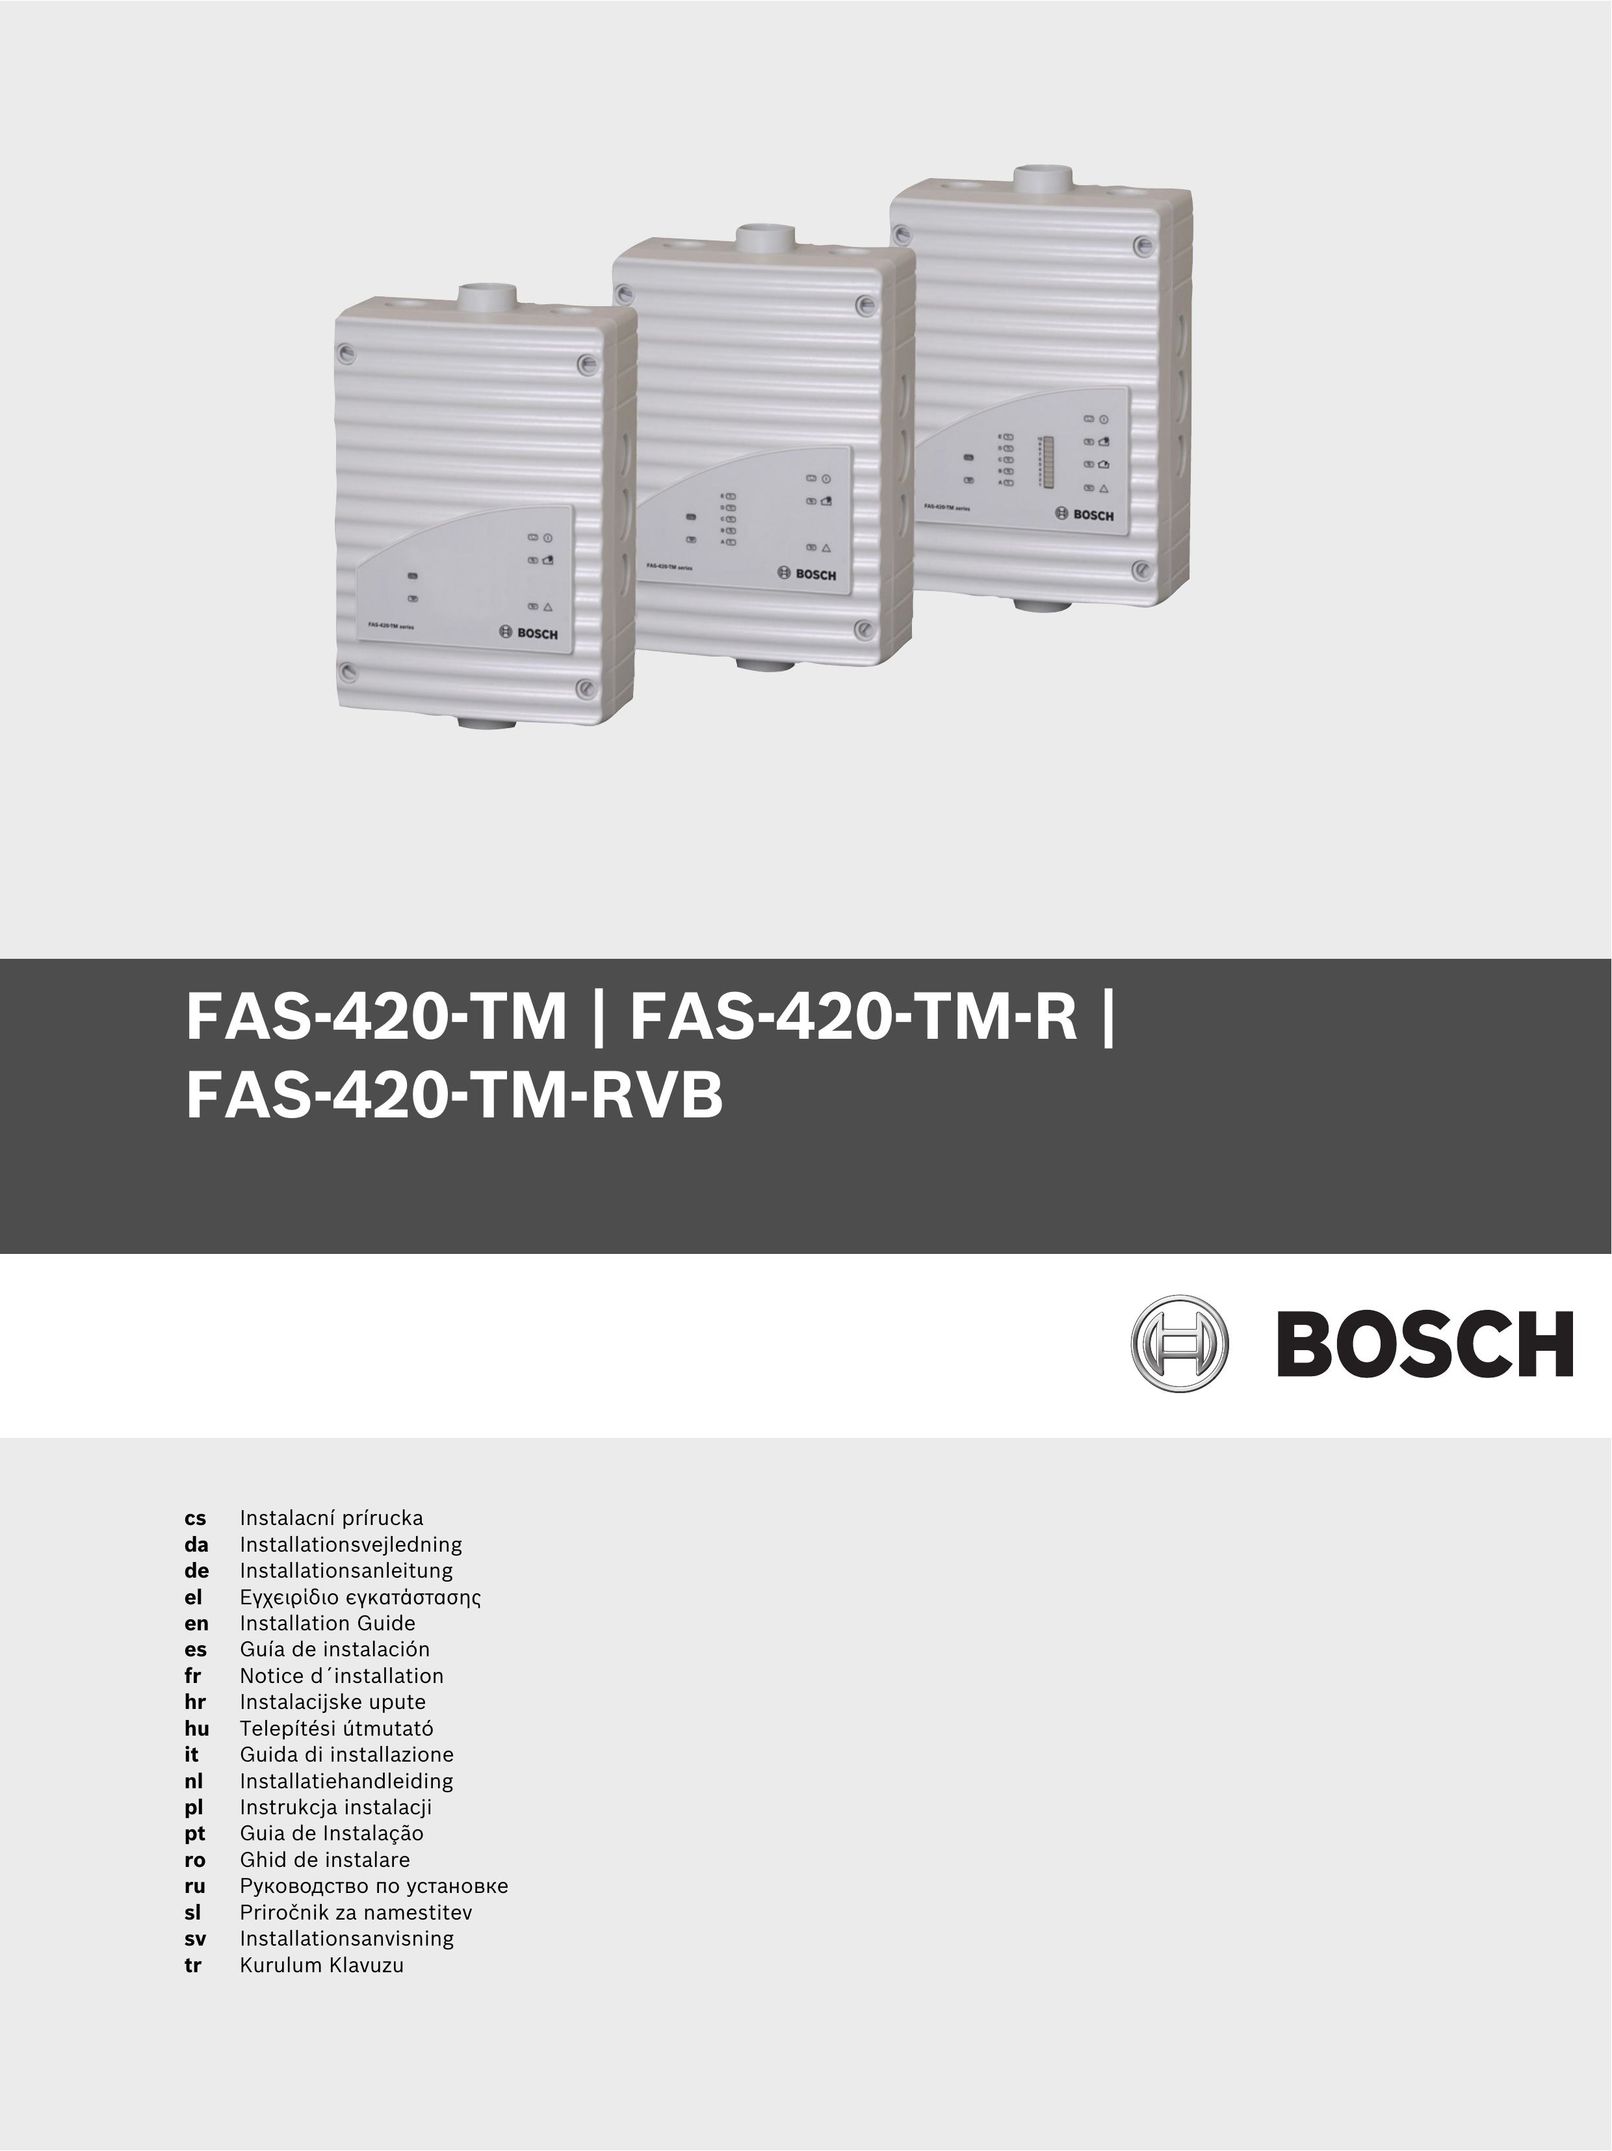 Bosch Appliances FAS-420-TM-RVB Smoke Alarm User Manual